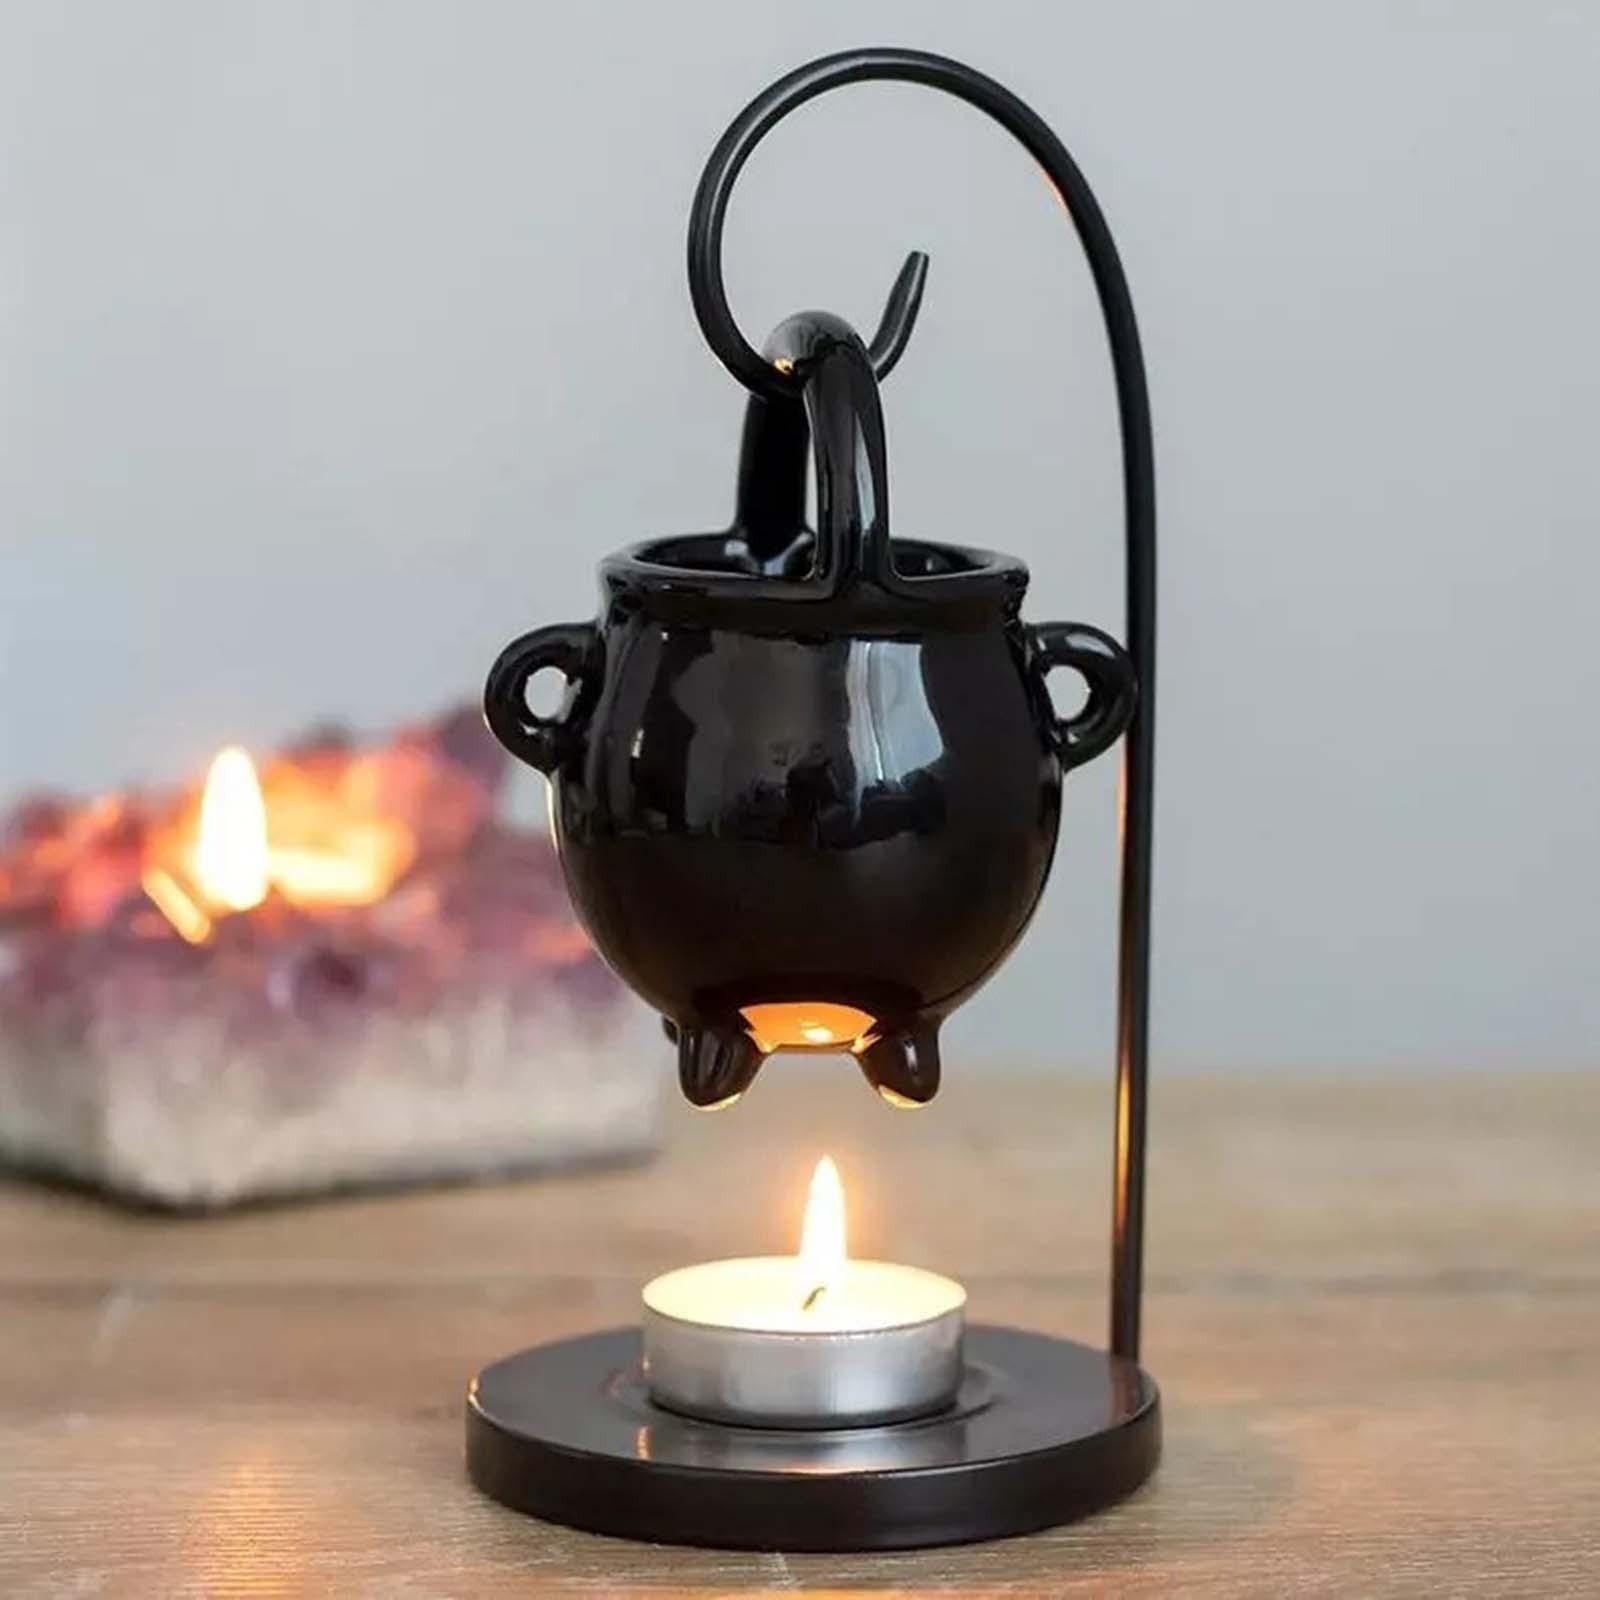 Witches Cauldron Essential Oil Wax Melt Burner - Wax Melt Burner from Dear Cece - Just £19.99! Shop now at Dear Cece